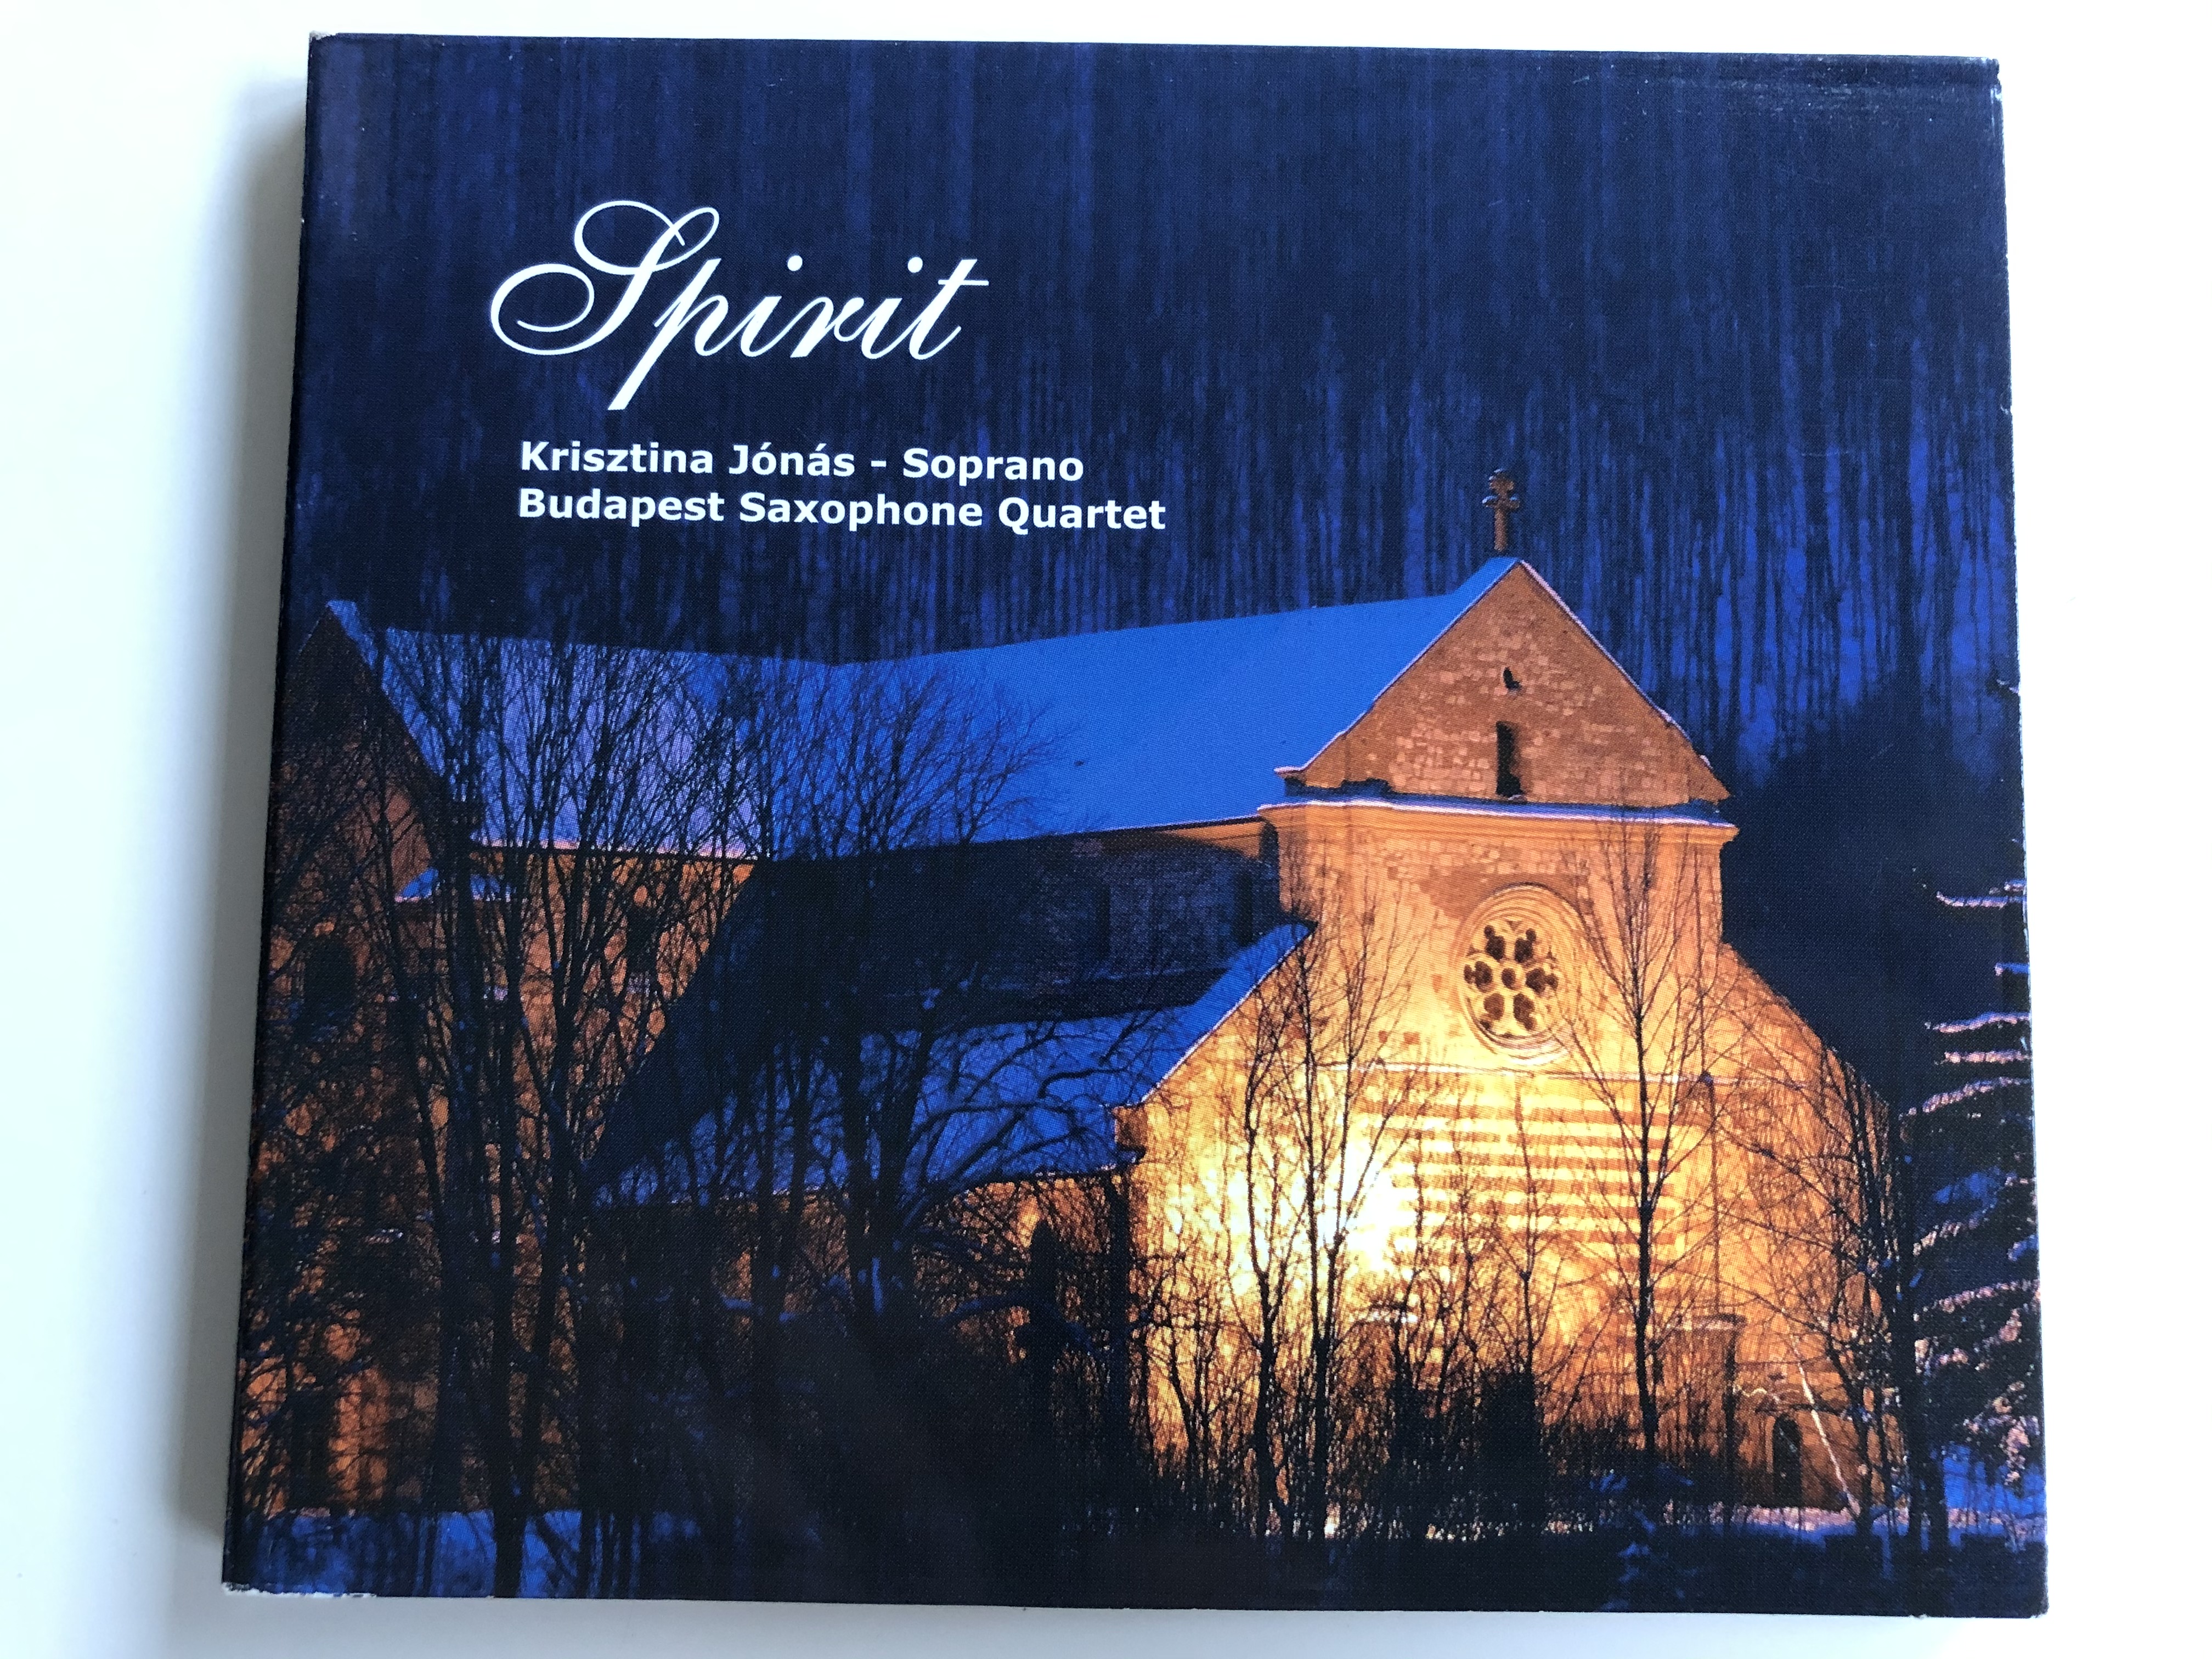 spirit-soprano-krisztina-jonas-budapest-saxophone-quartet-allero-thaler-audio-cd-2004-mza-073-1-.jpg